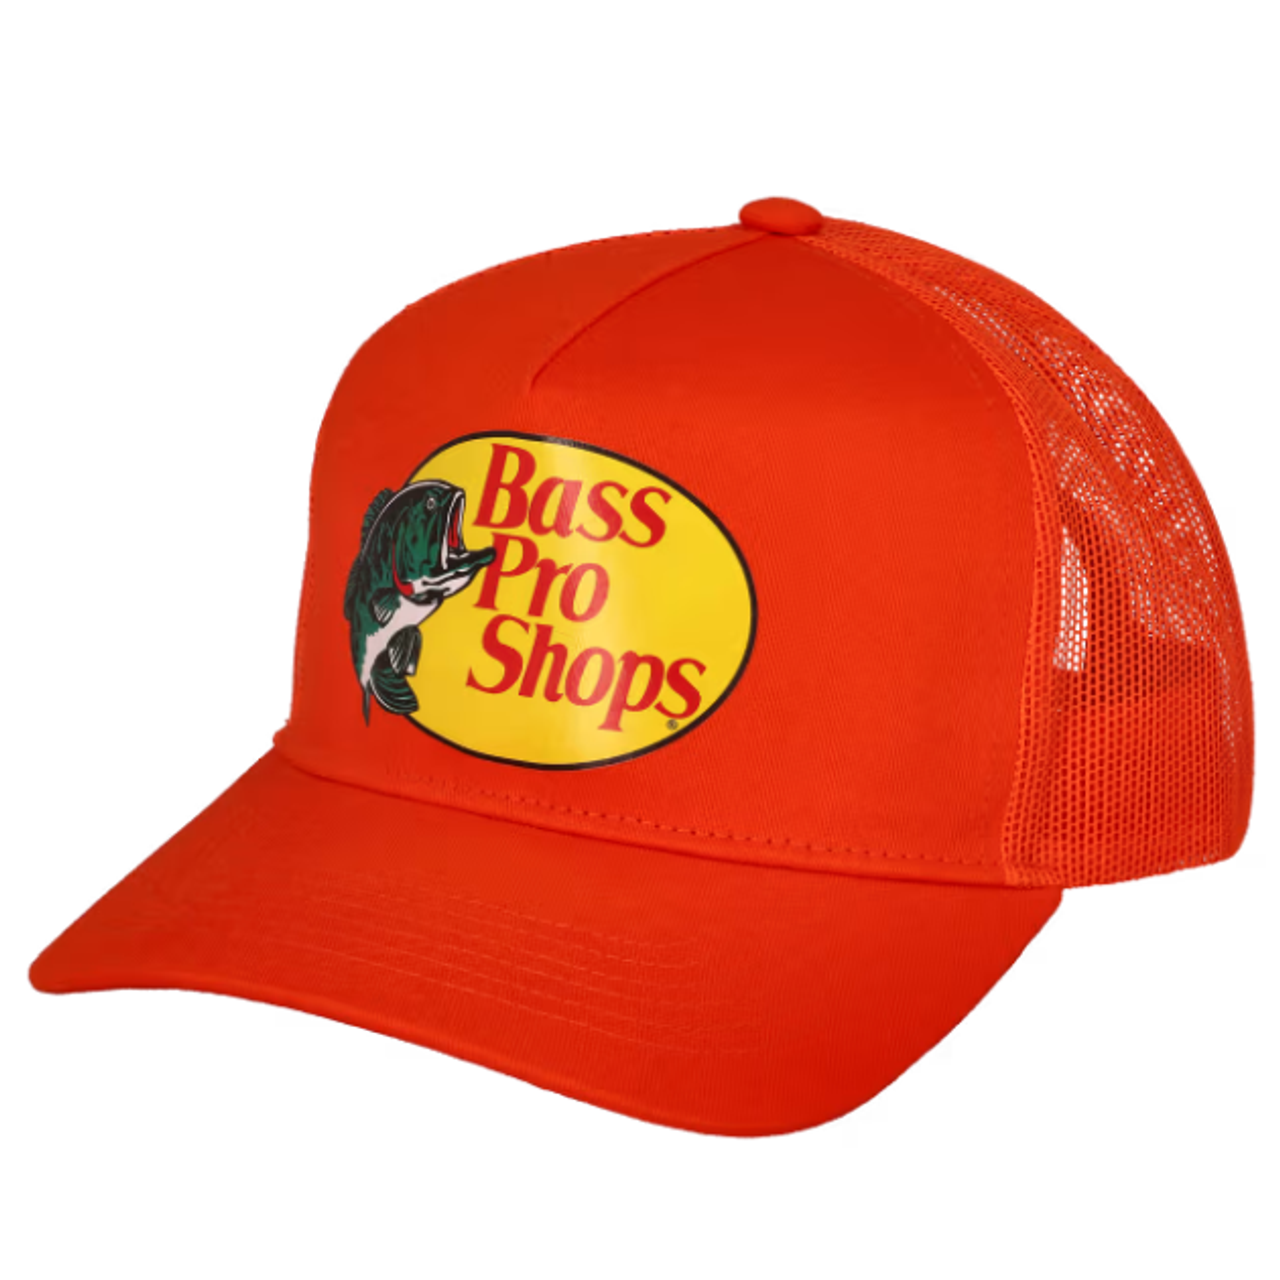 Bass Pro Shops Mesh Trucker Cap Orange - Printed Logo - Boaters World